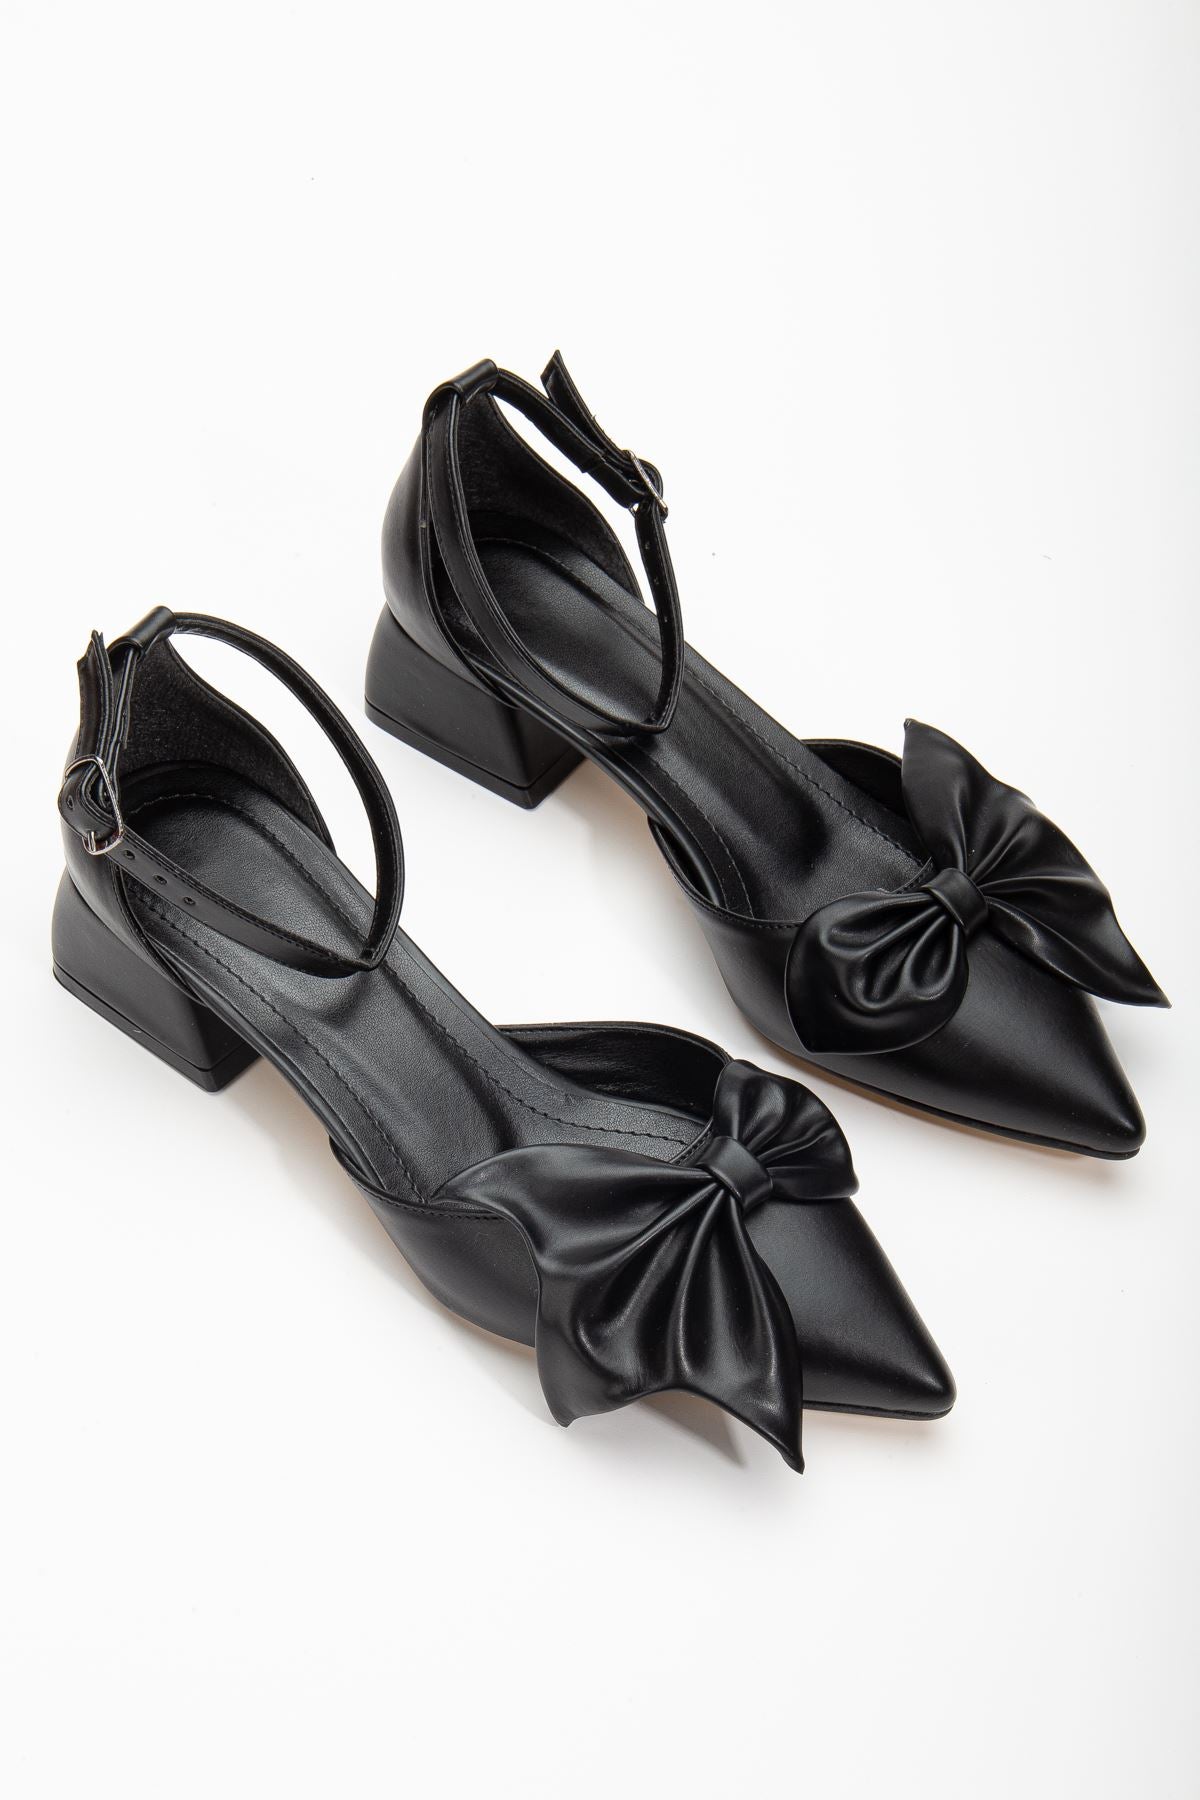 Soria Black Skin Women's Heeled Shoes - STREETMODE™